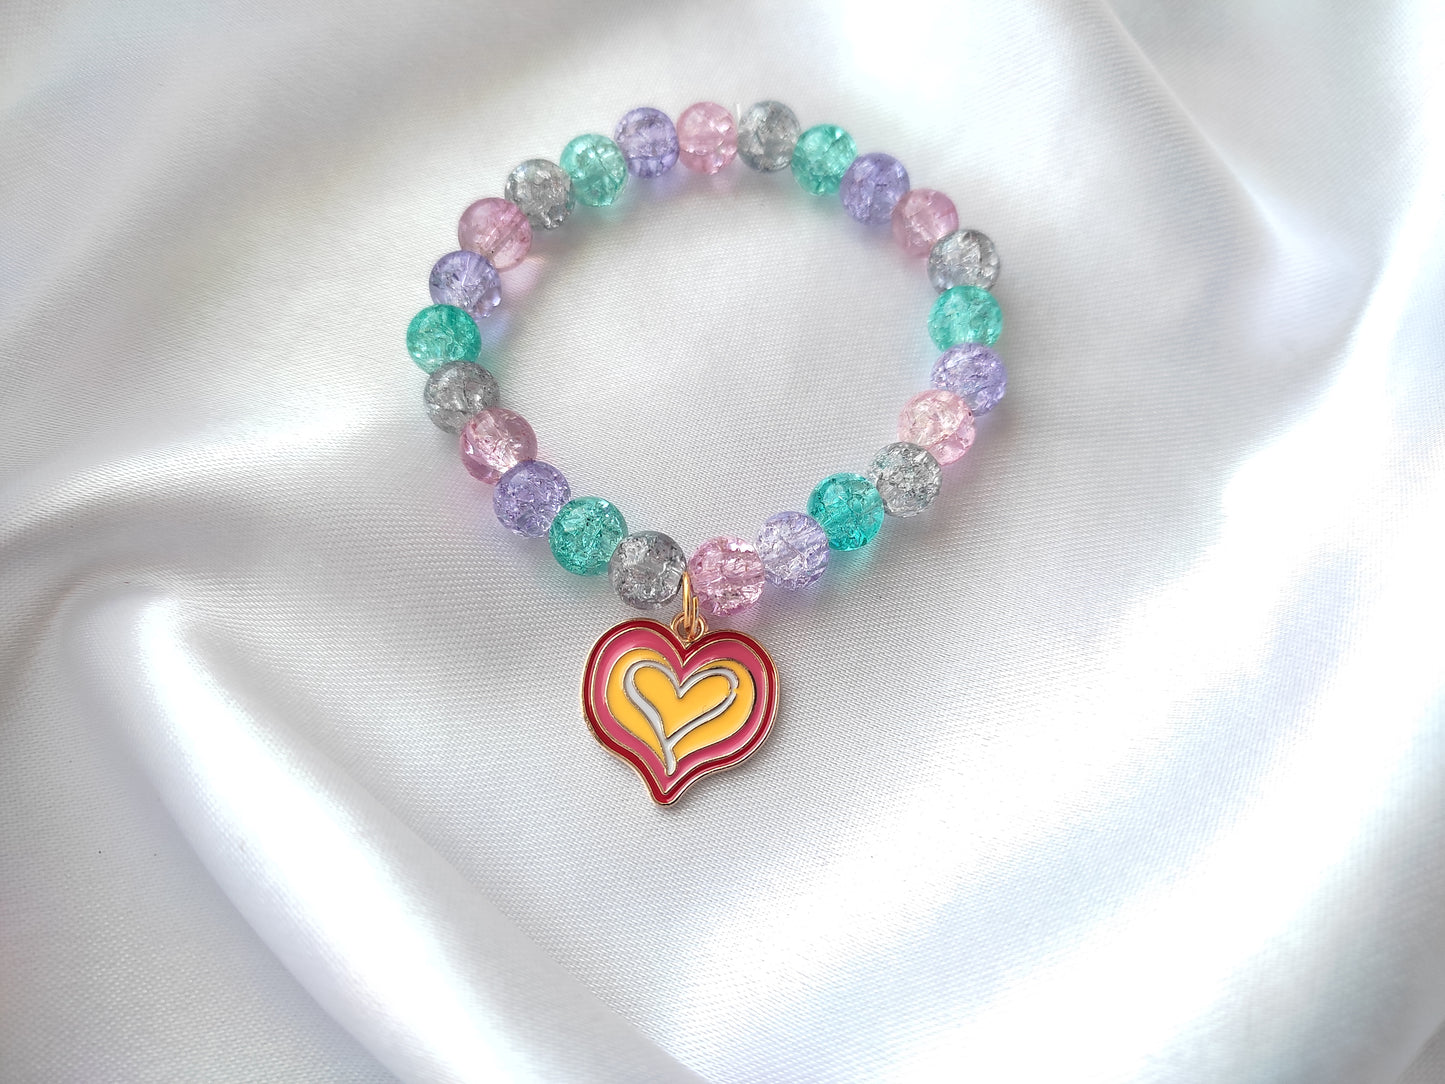 Cute heart multi-colour beads bracelet for women and girls